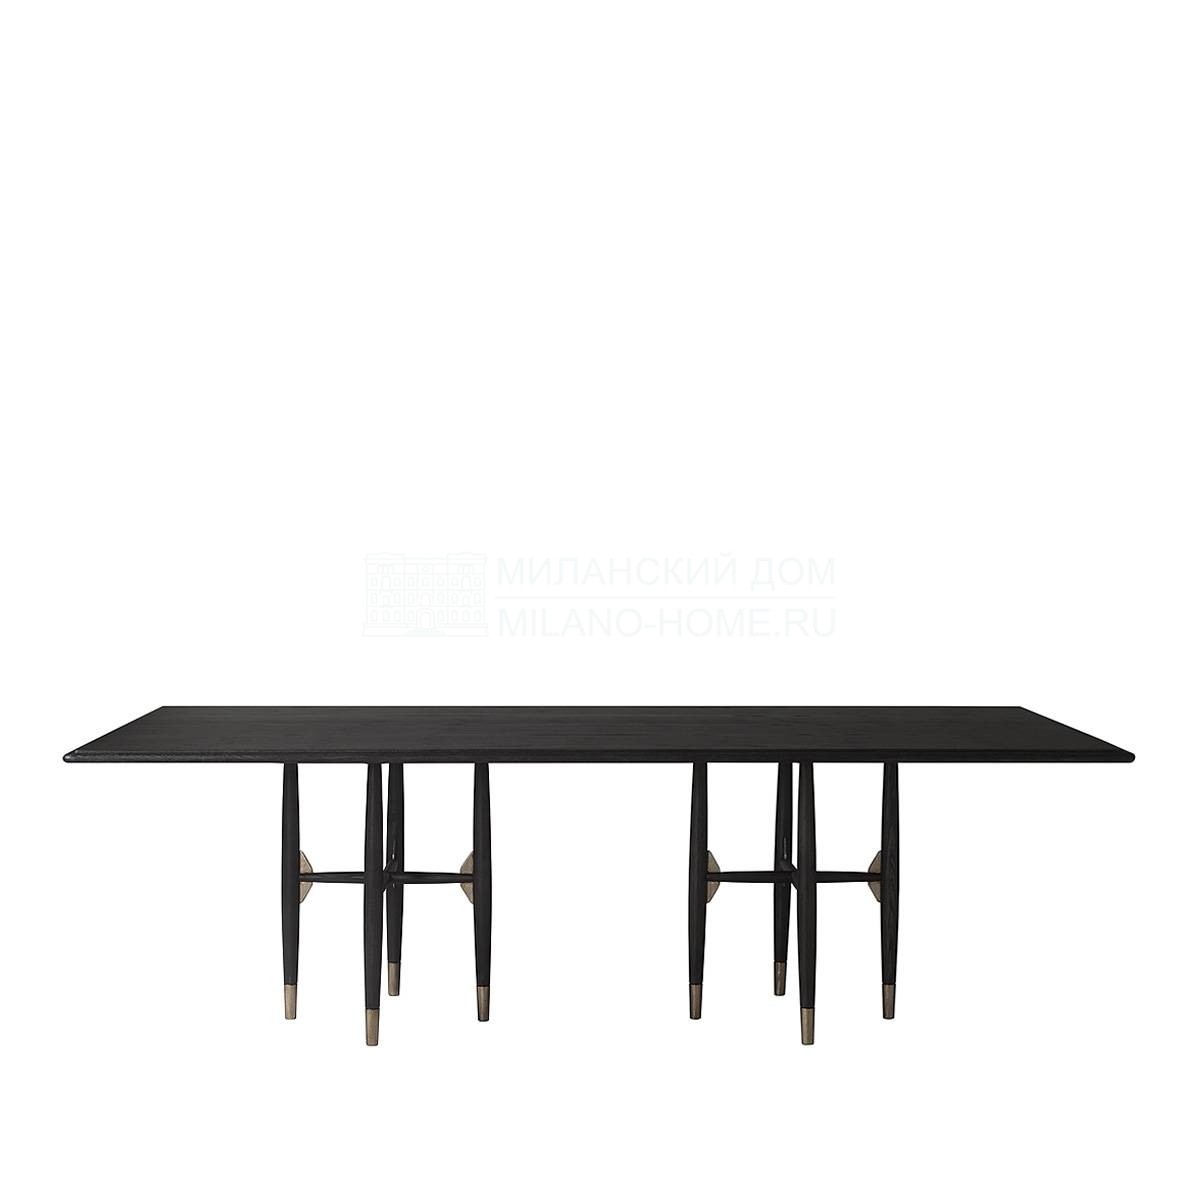 Обеденный стол The one table из Испании фабрики COLECCION ALEXANDRA